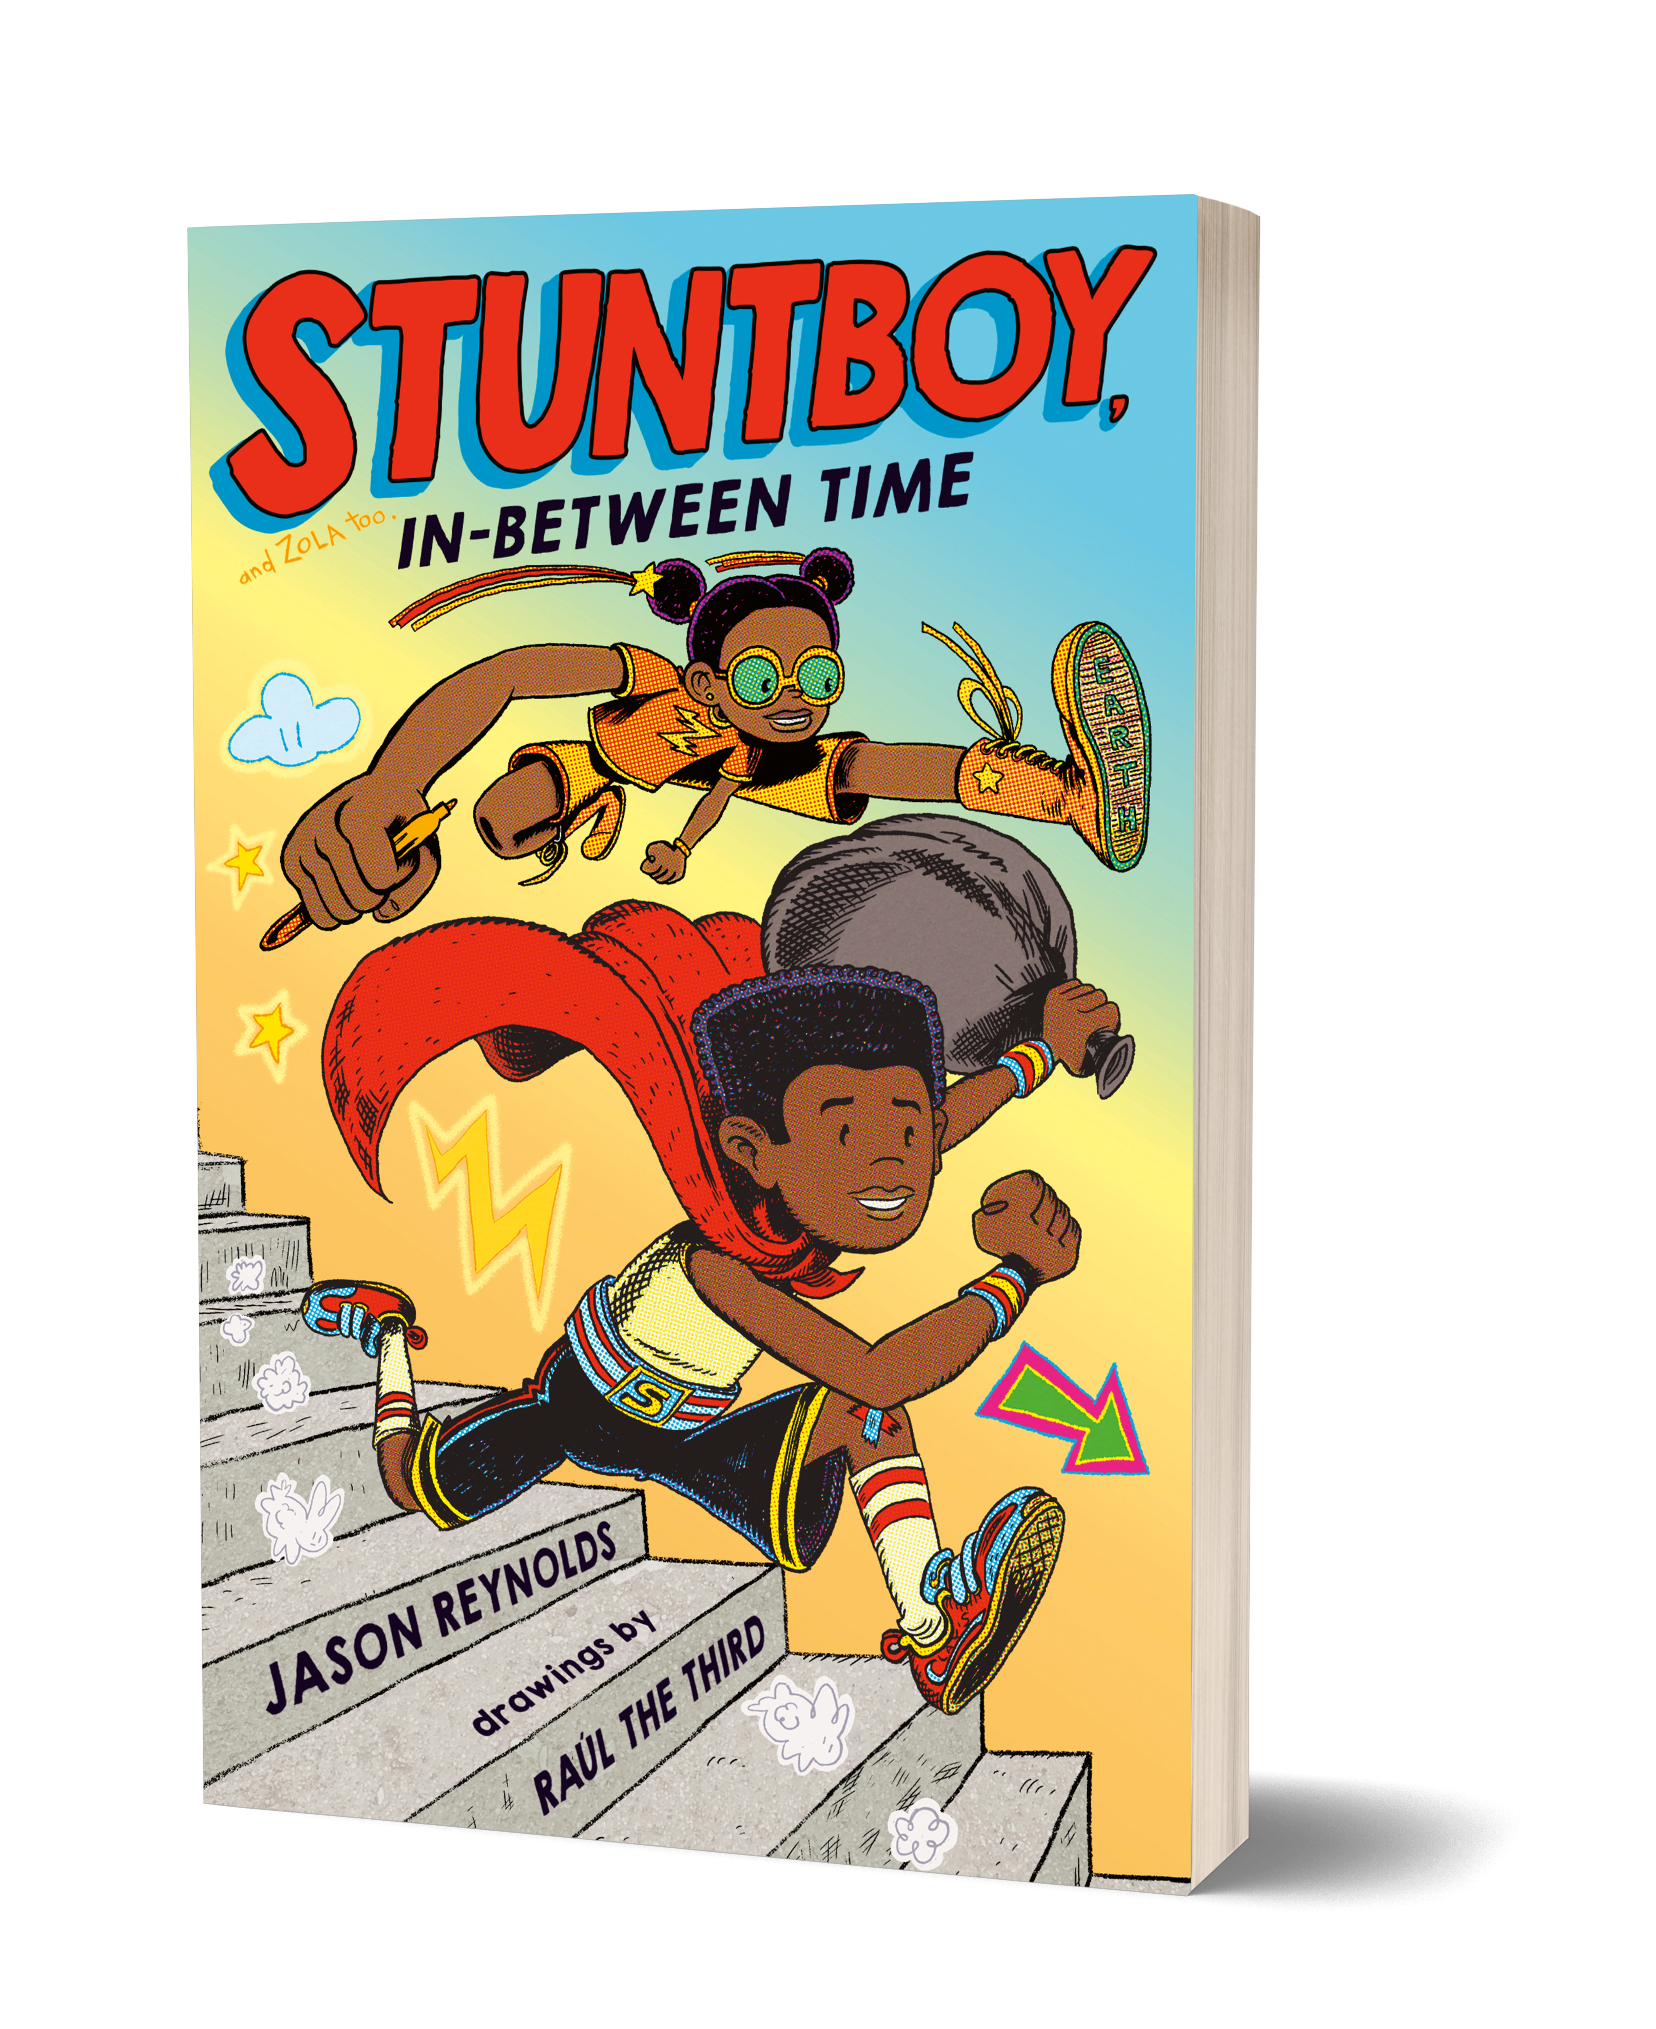 Stuntboy, In-Between Time